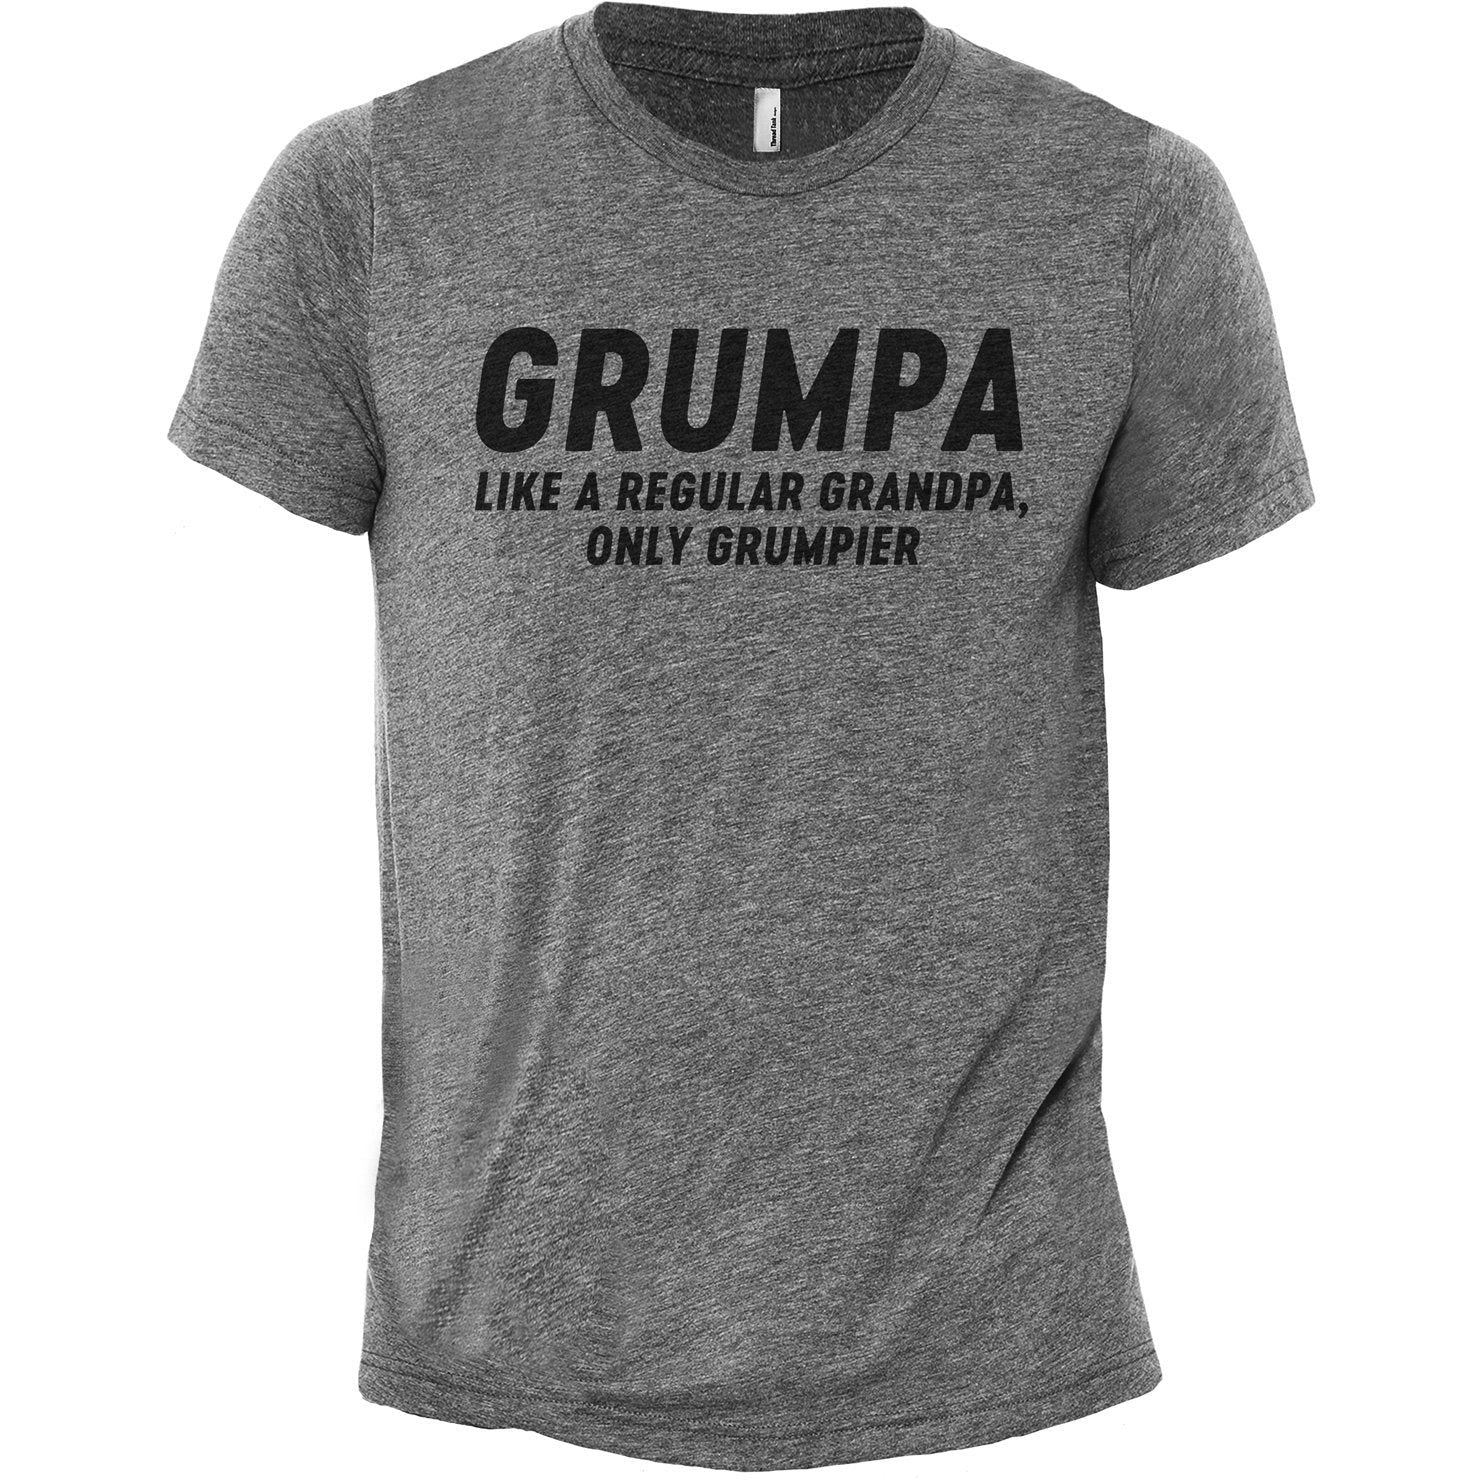 Grumpa Grandpa Heather Grey Printed Graphic Men's Crew T-Shirt Tee